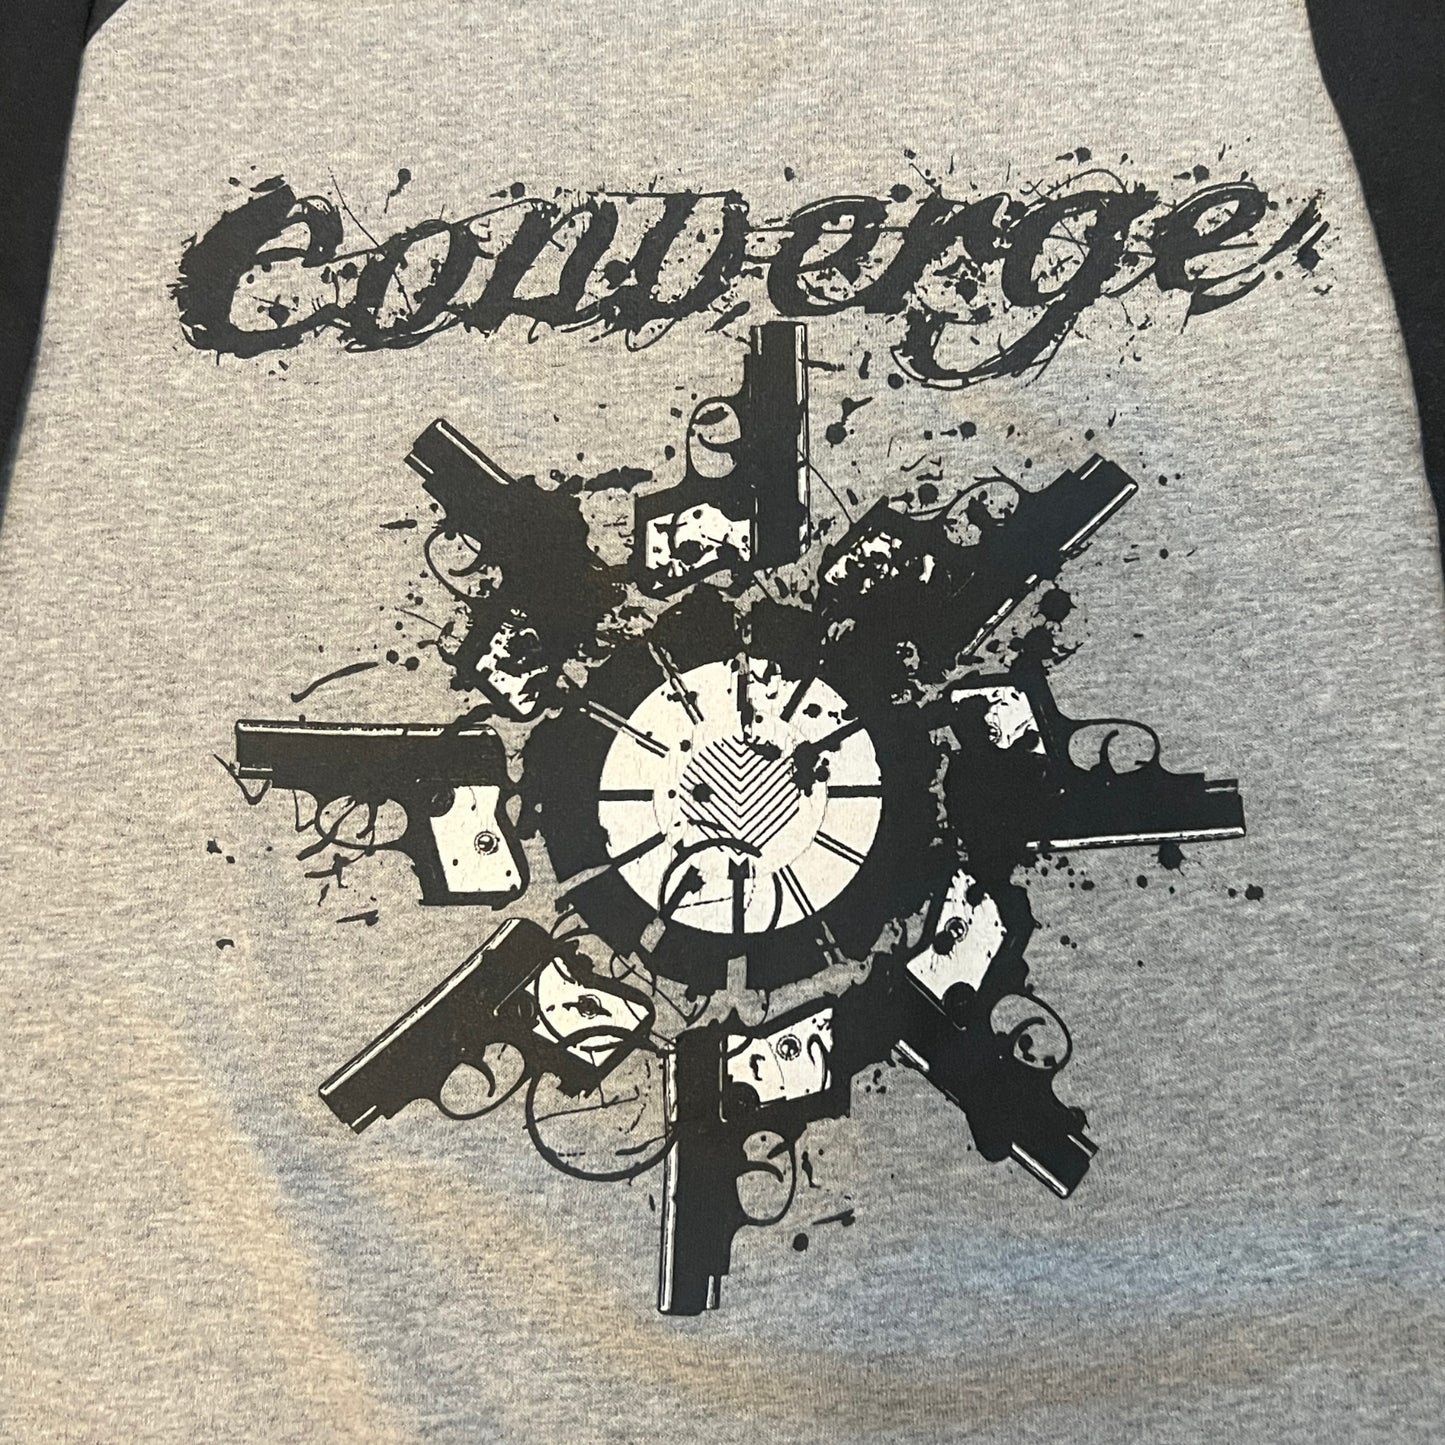 Converge Band Glory In Vengeance 2006 T-Shirt Raglan Size XL No Heroes